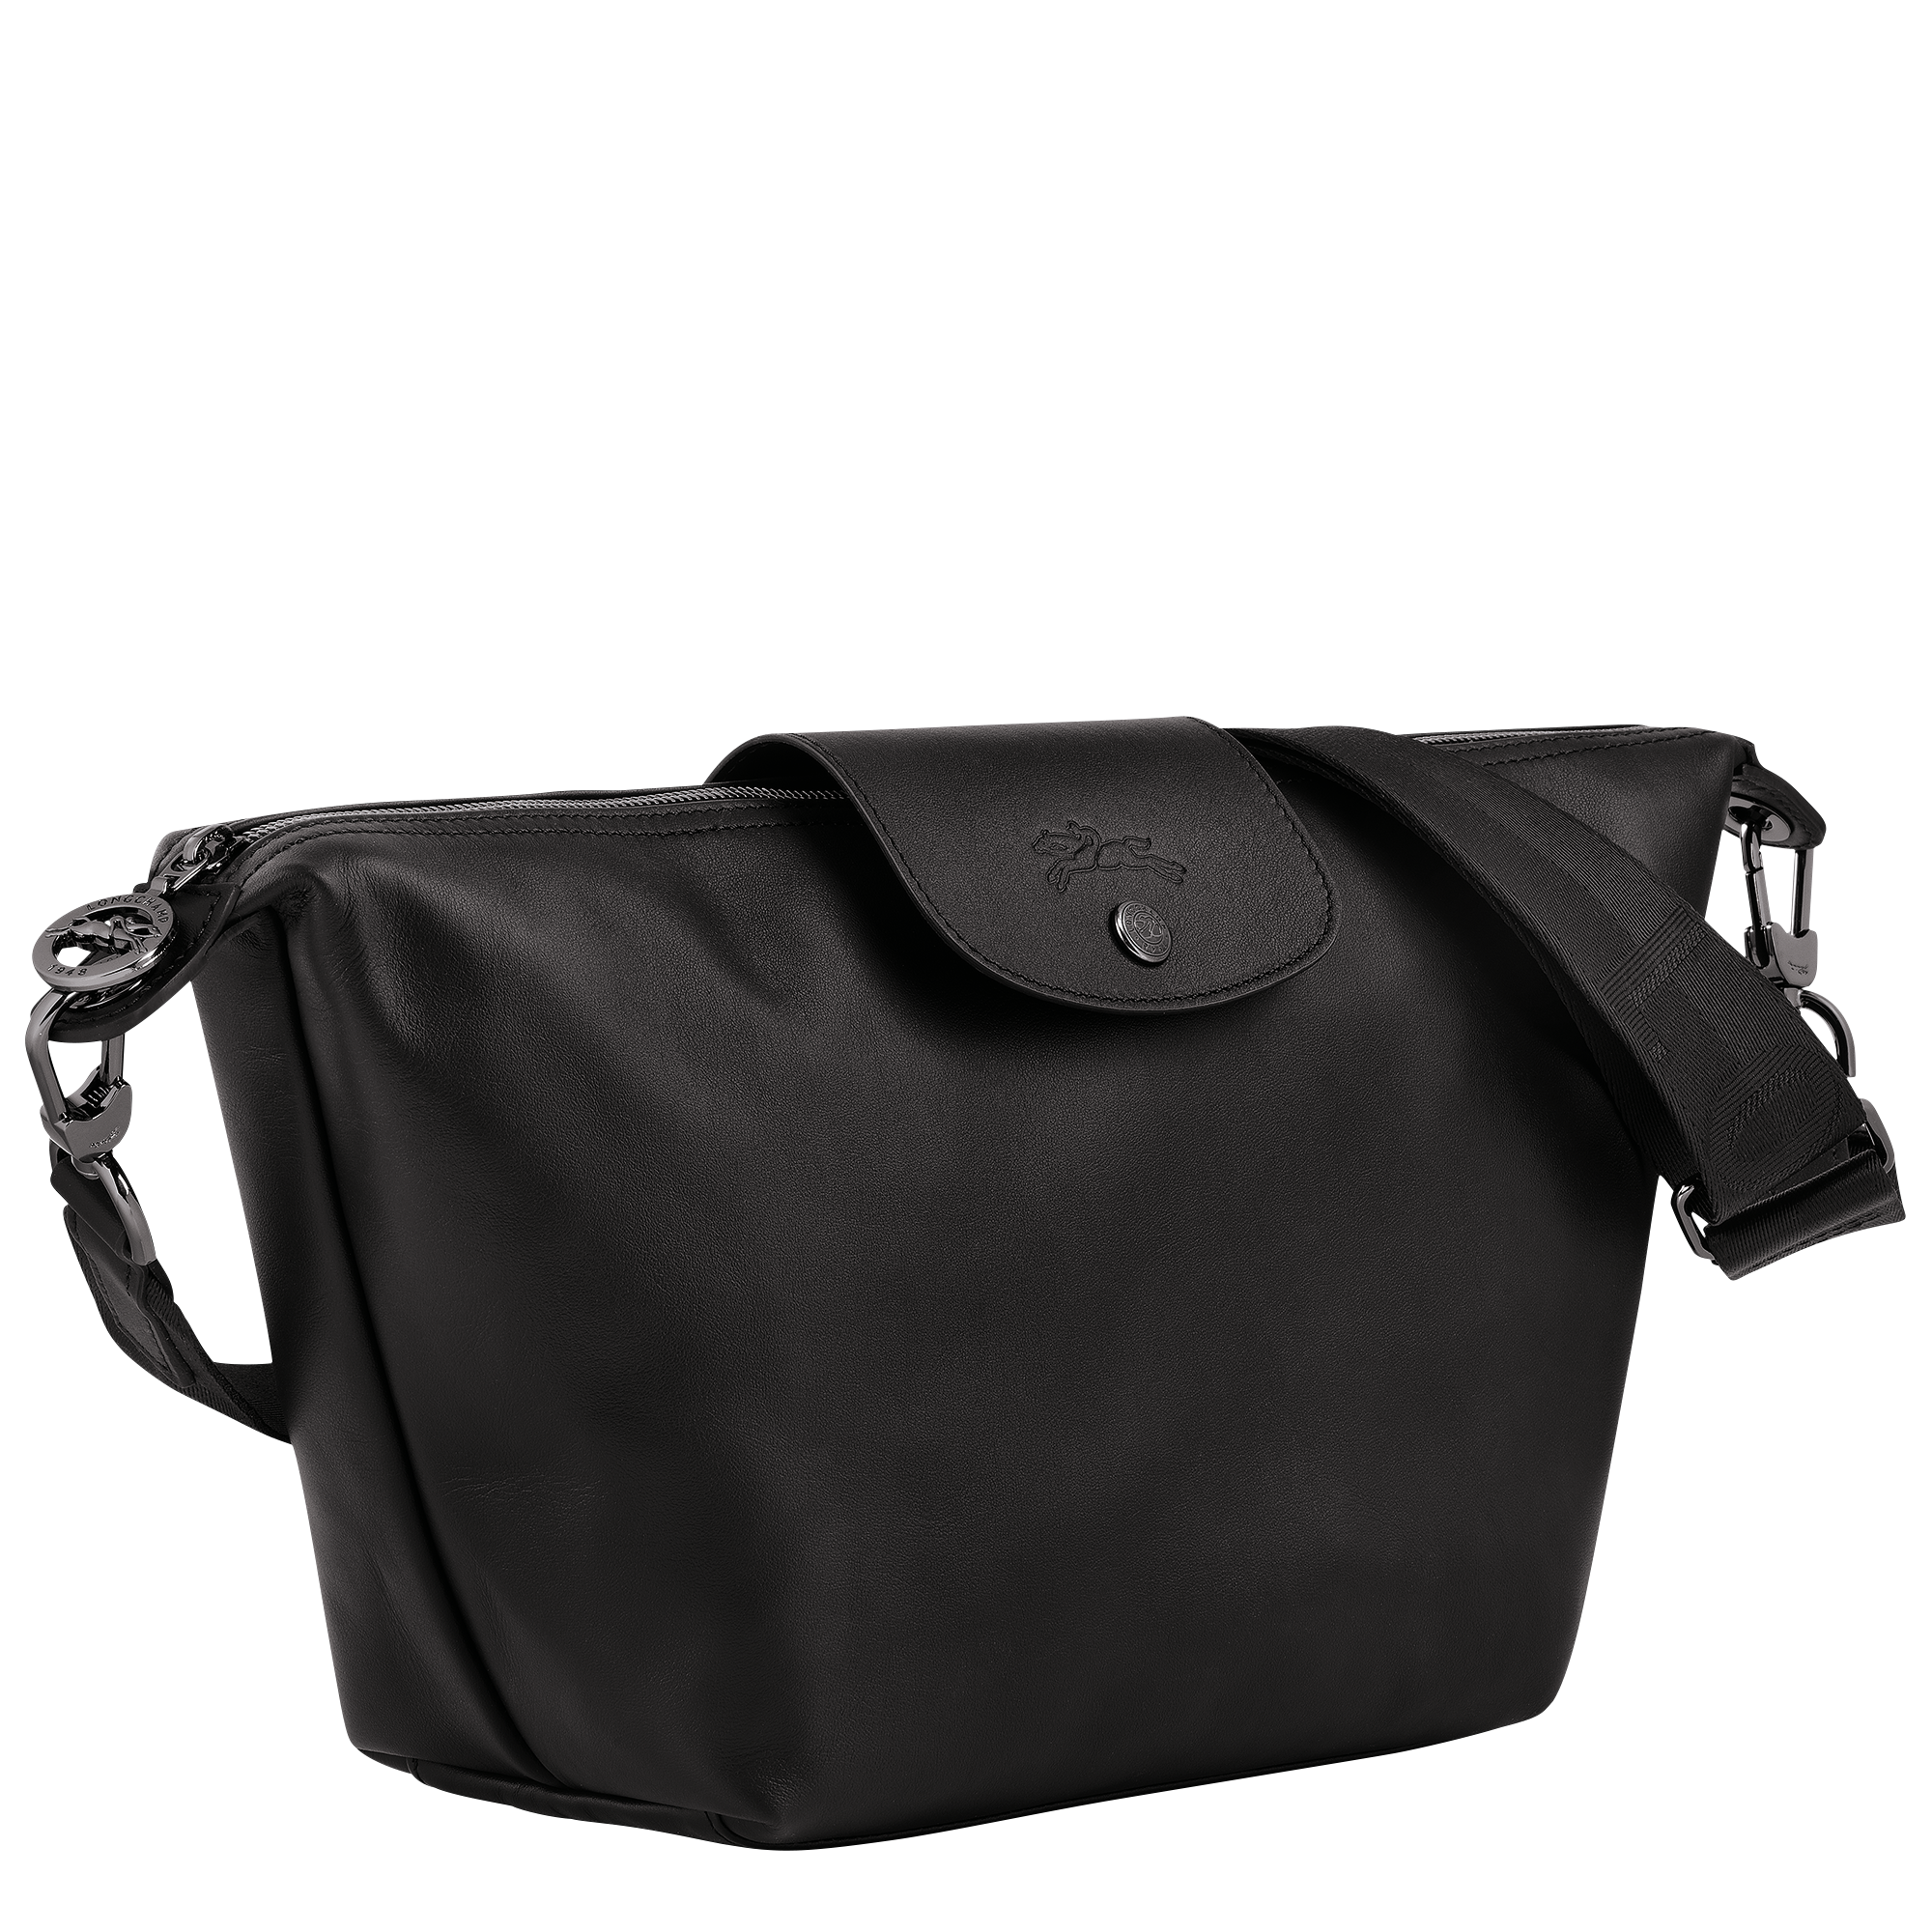 Le Pliage Xtra S Hobo bag Wheat - Leather (10210987A81)